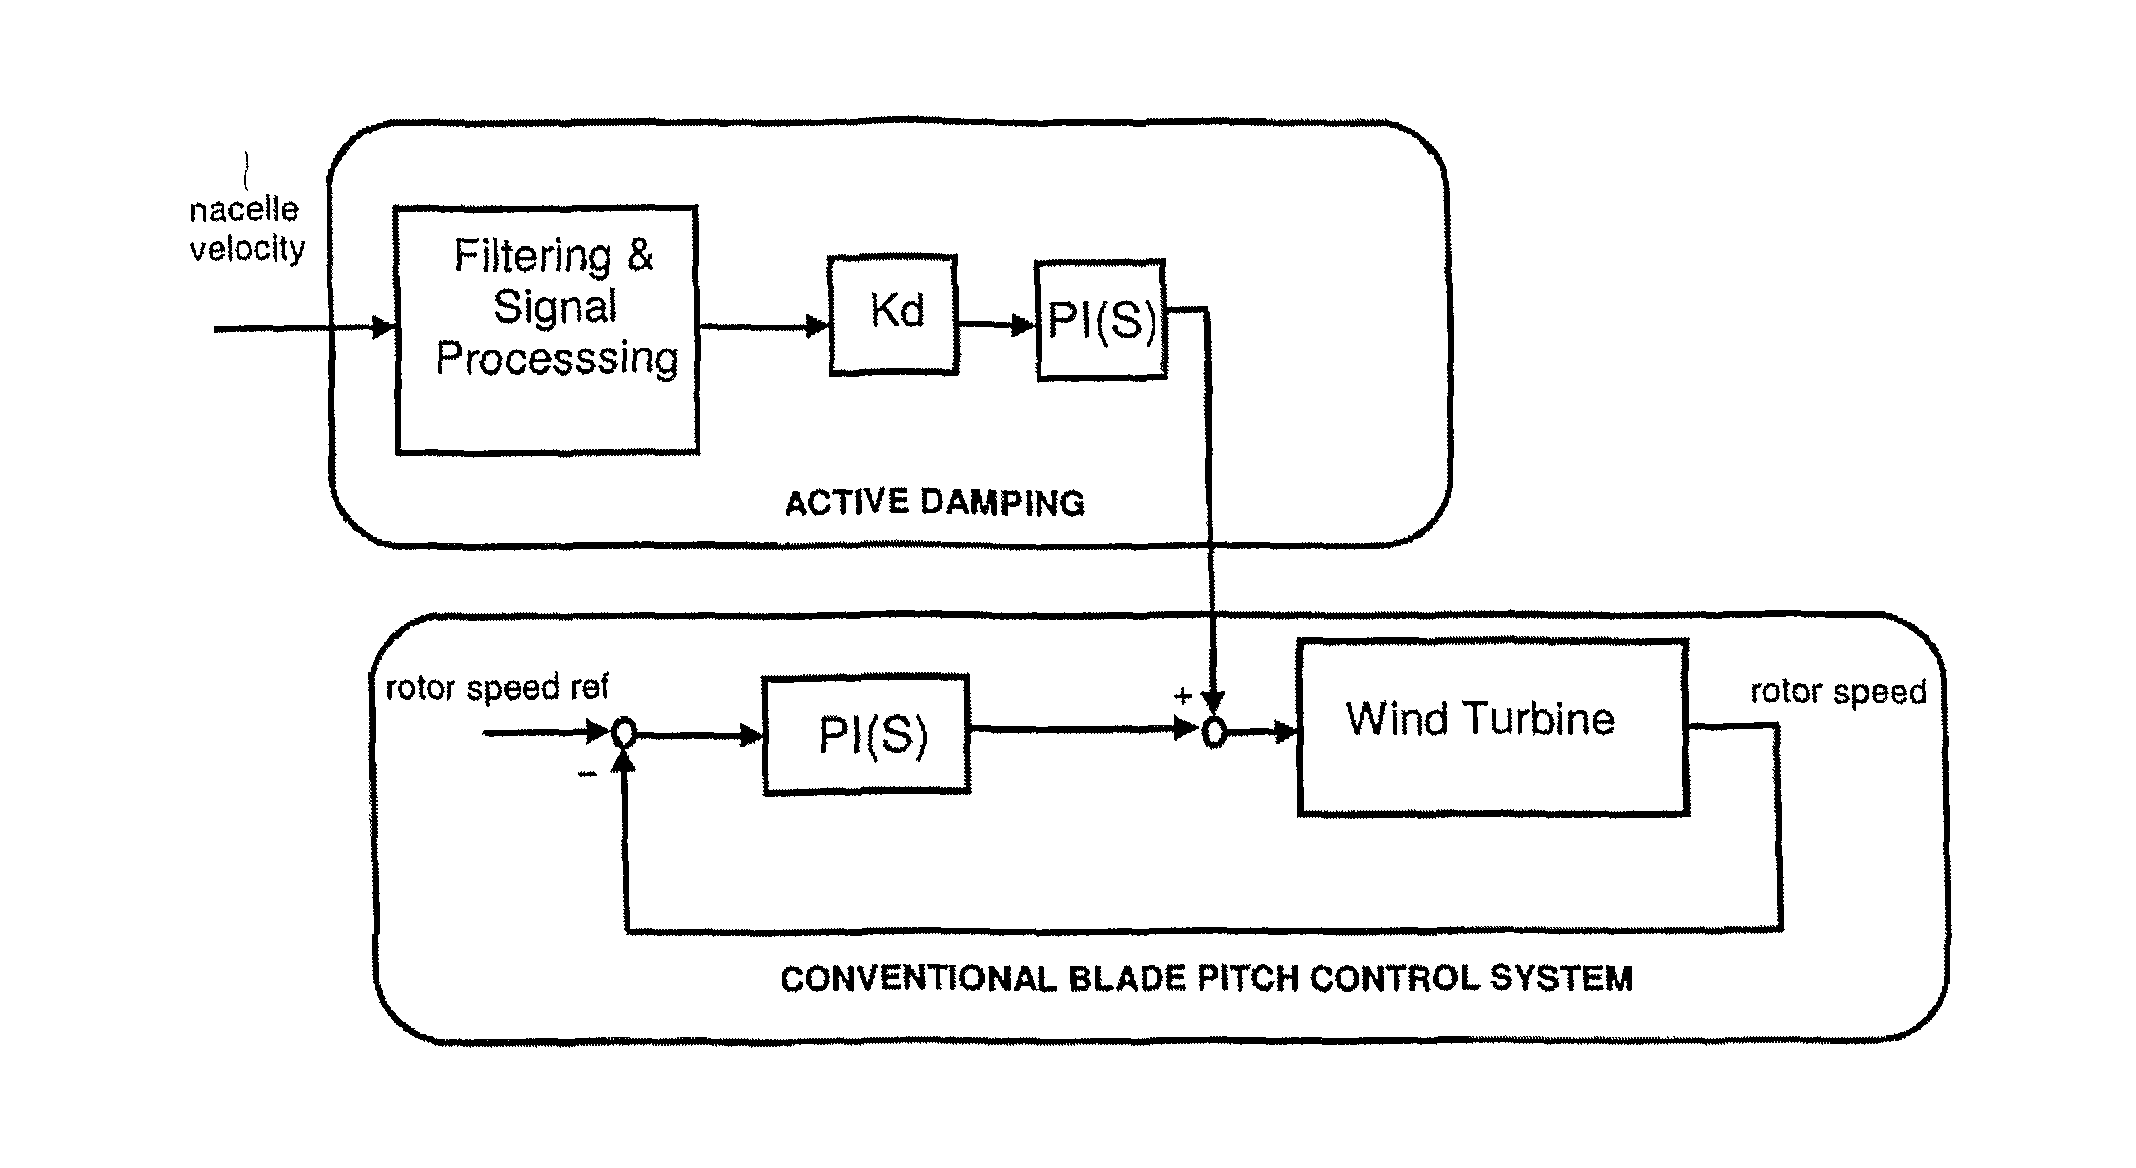 Blade pitch control in a wind turbine installation